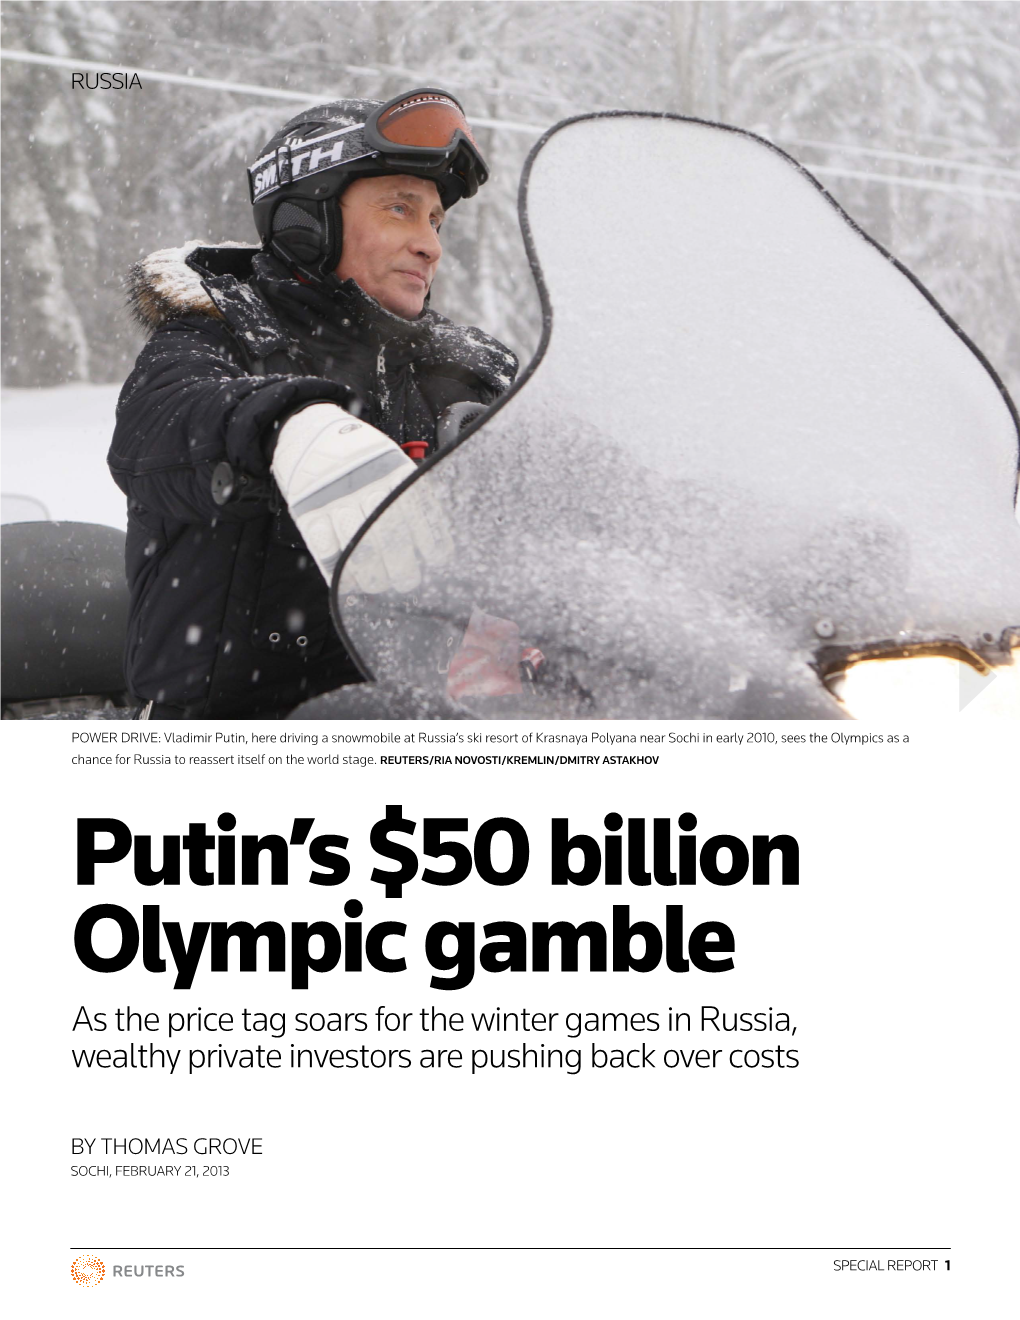 Putin's $50 Billion Olympic Gamble